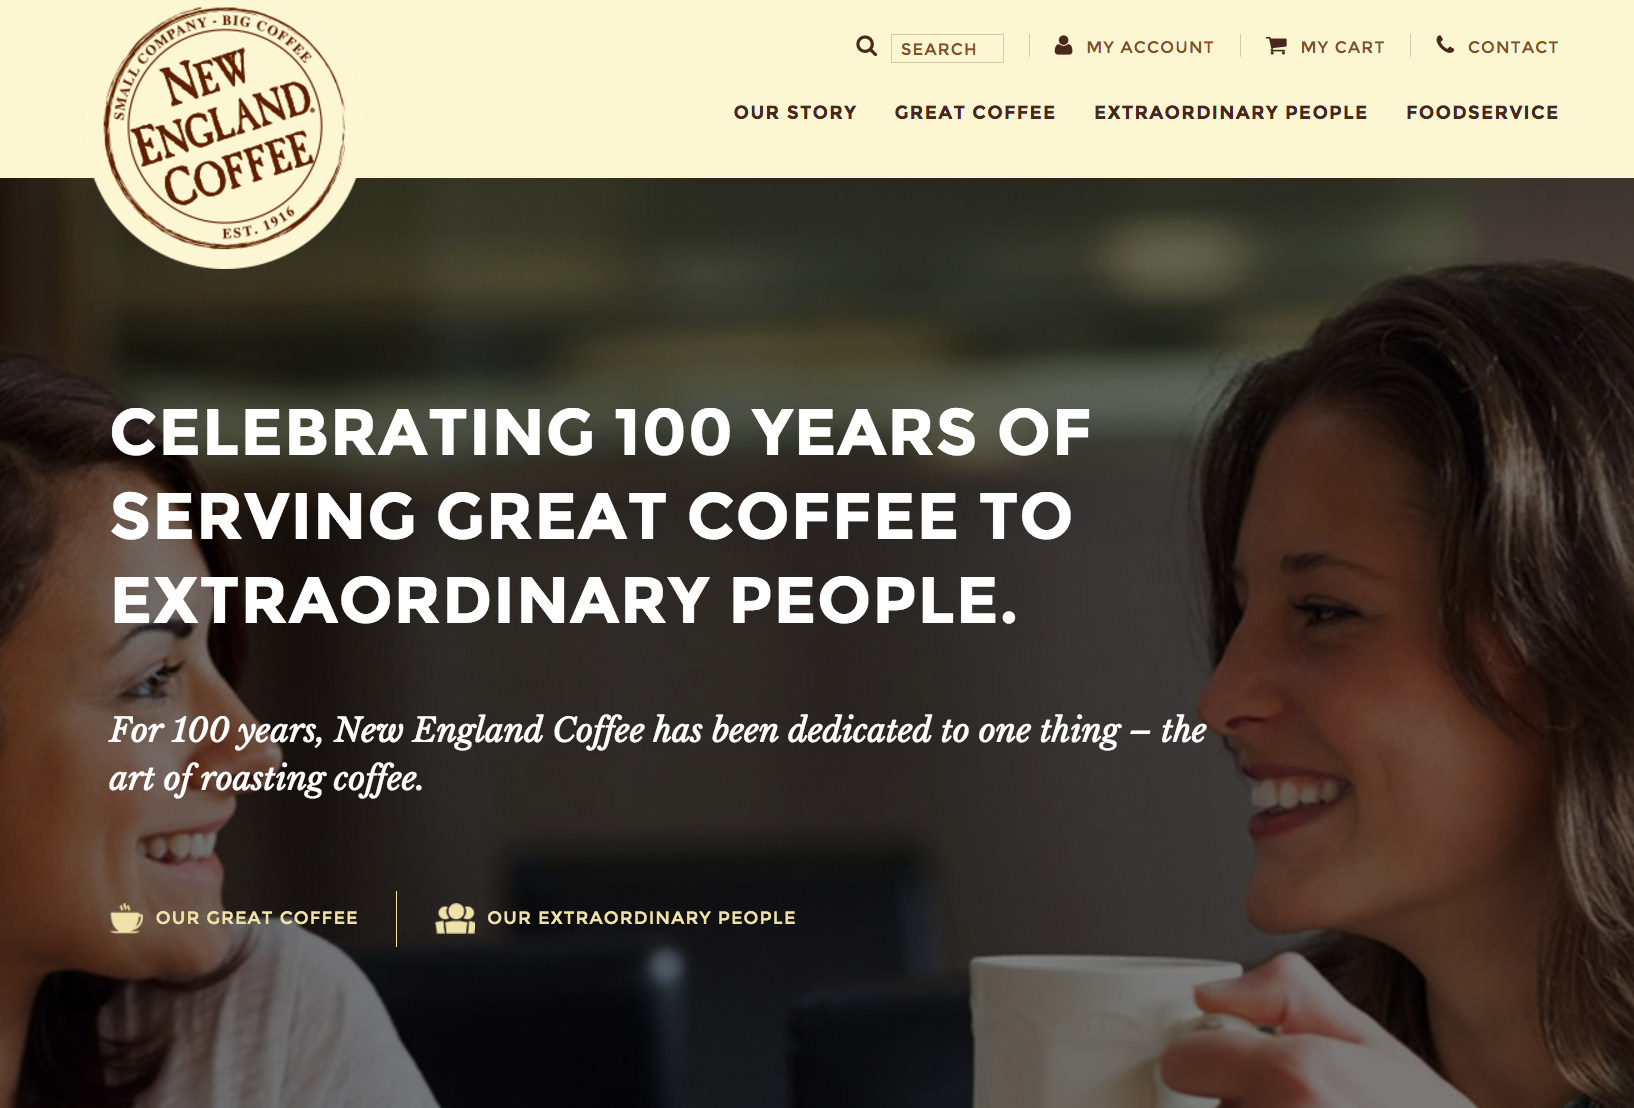 New England Coffee new website